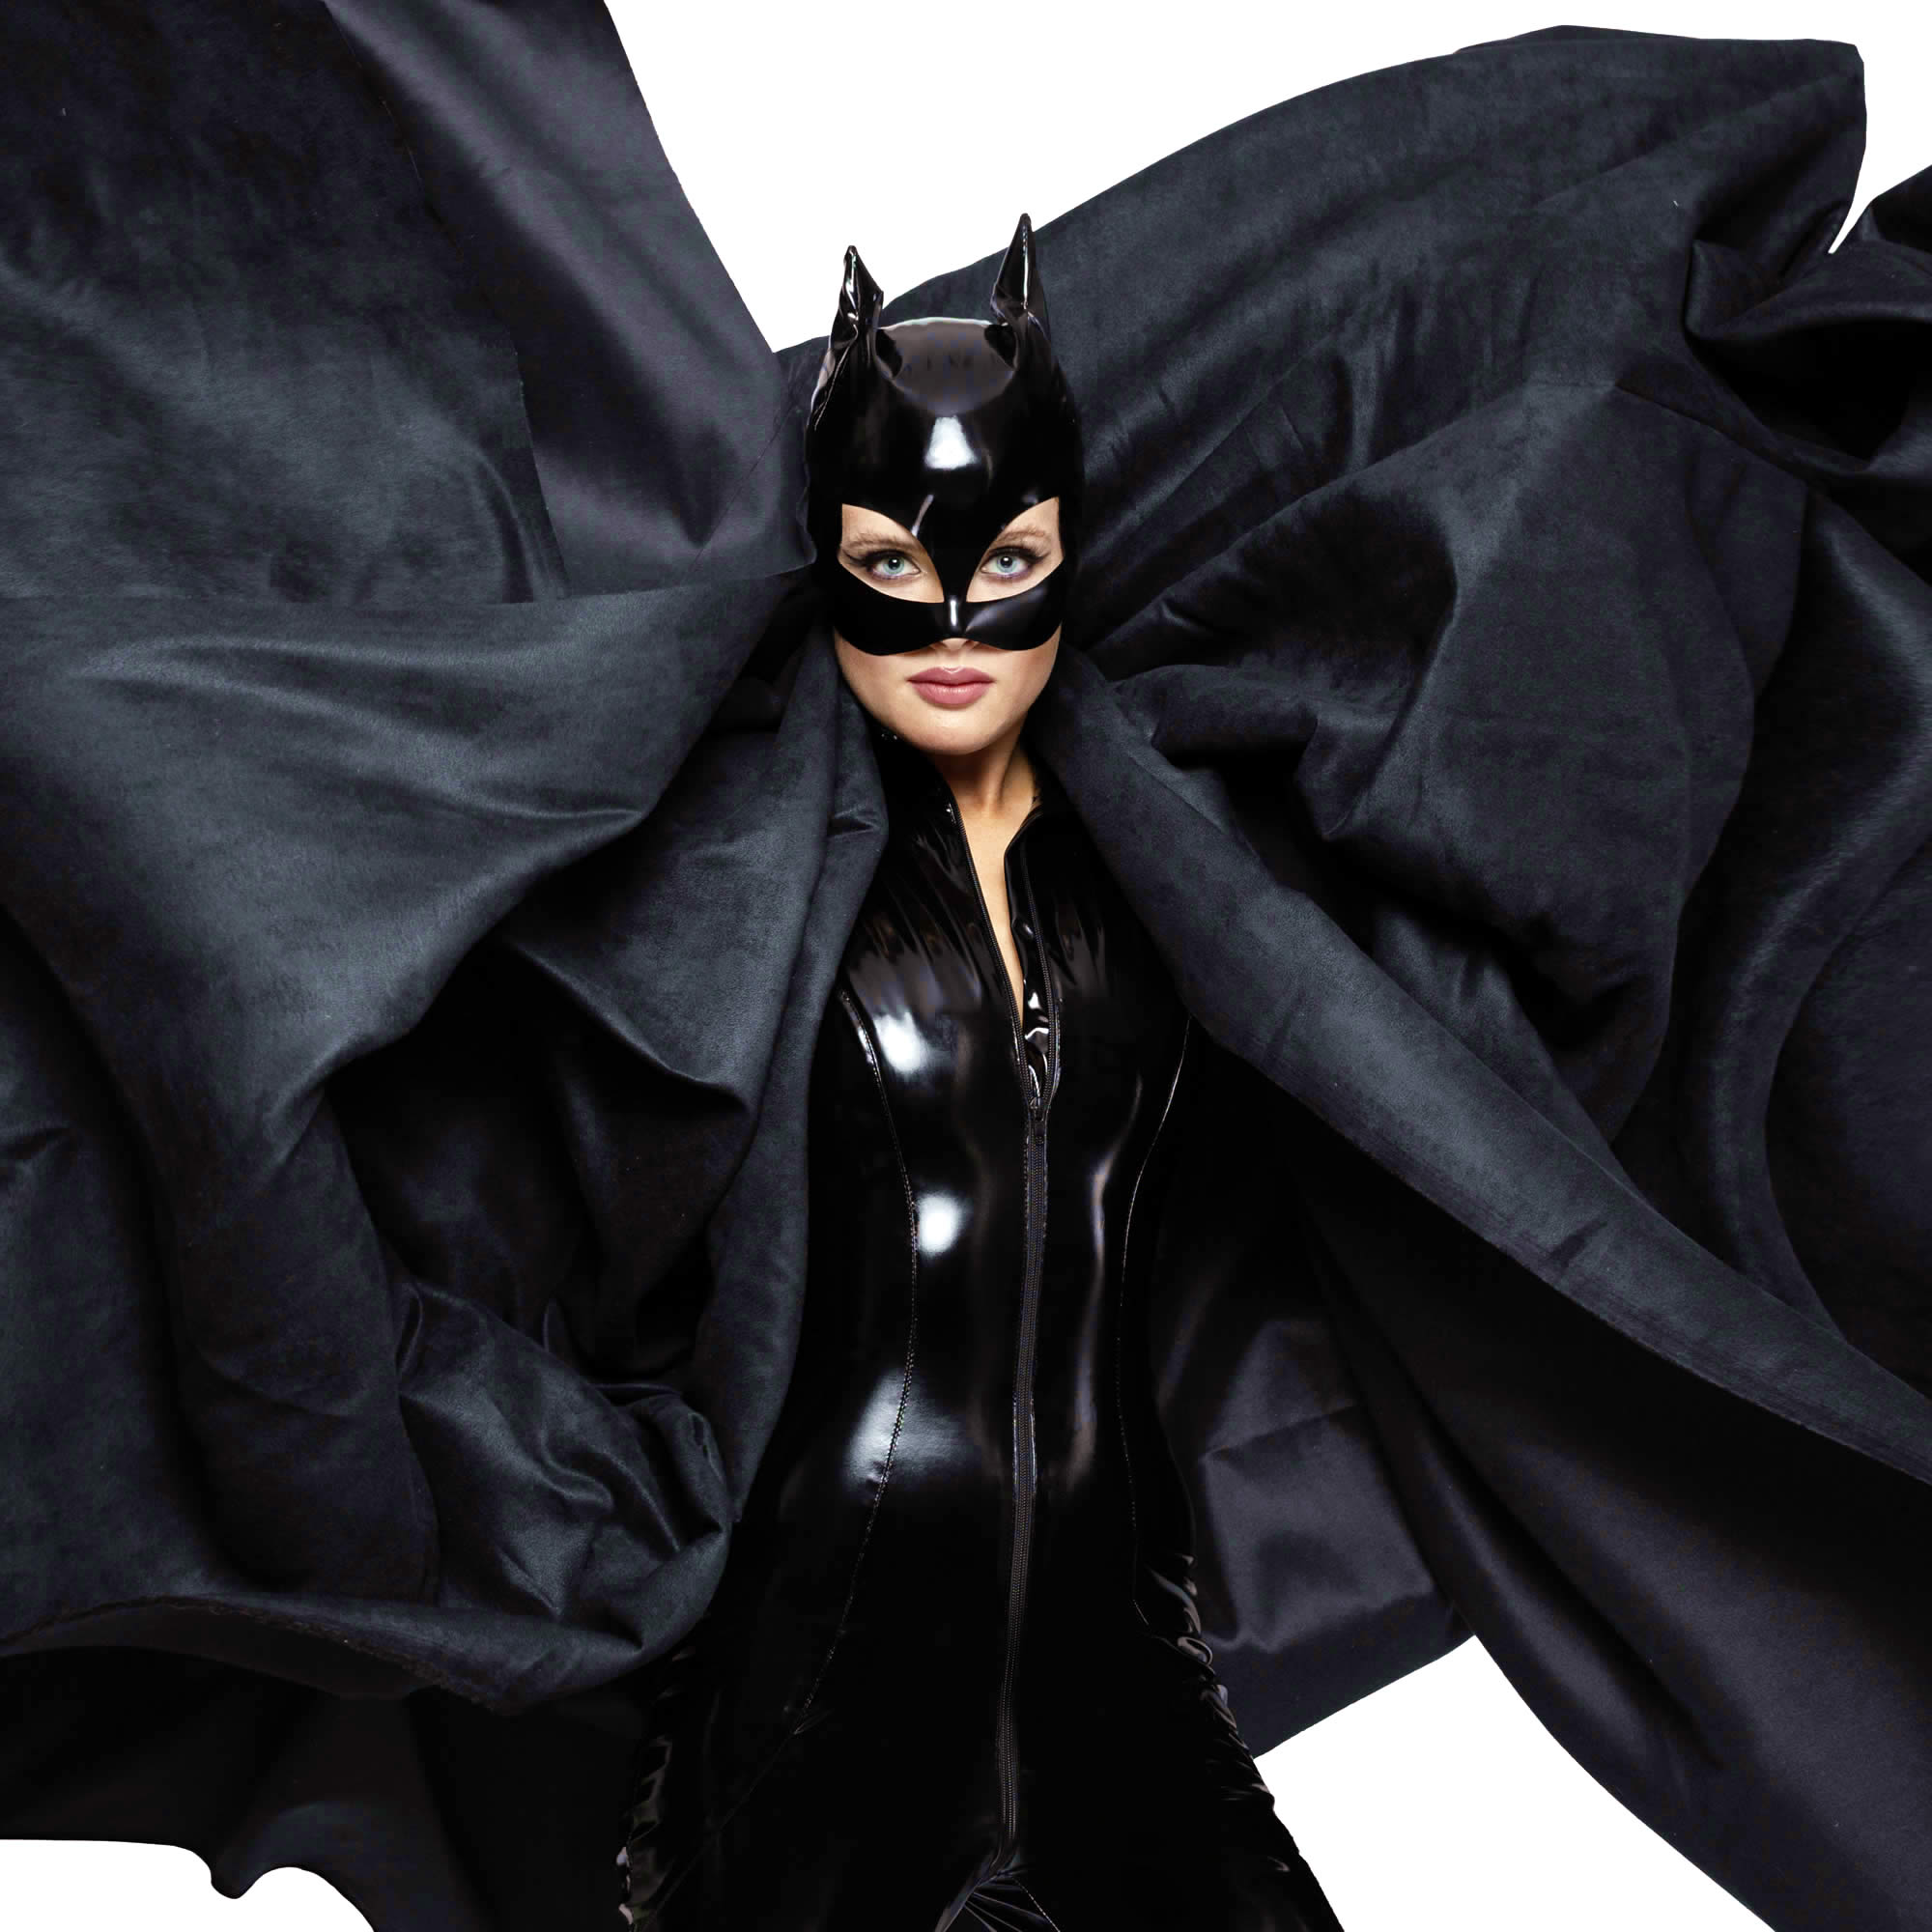 Catwoman Vinyl Jumpsuit in Black